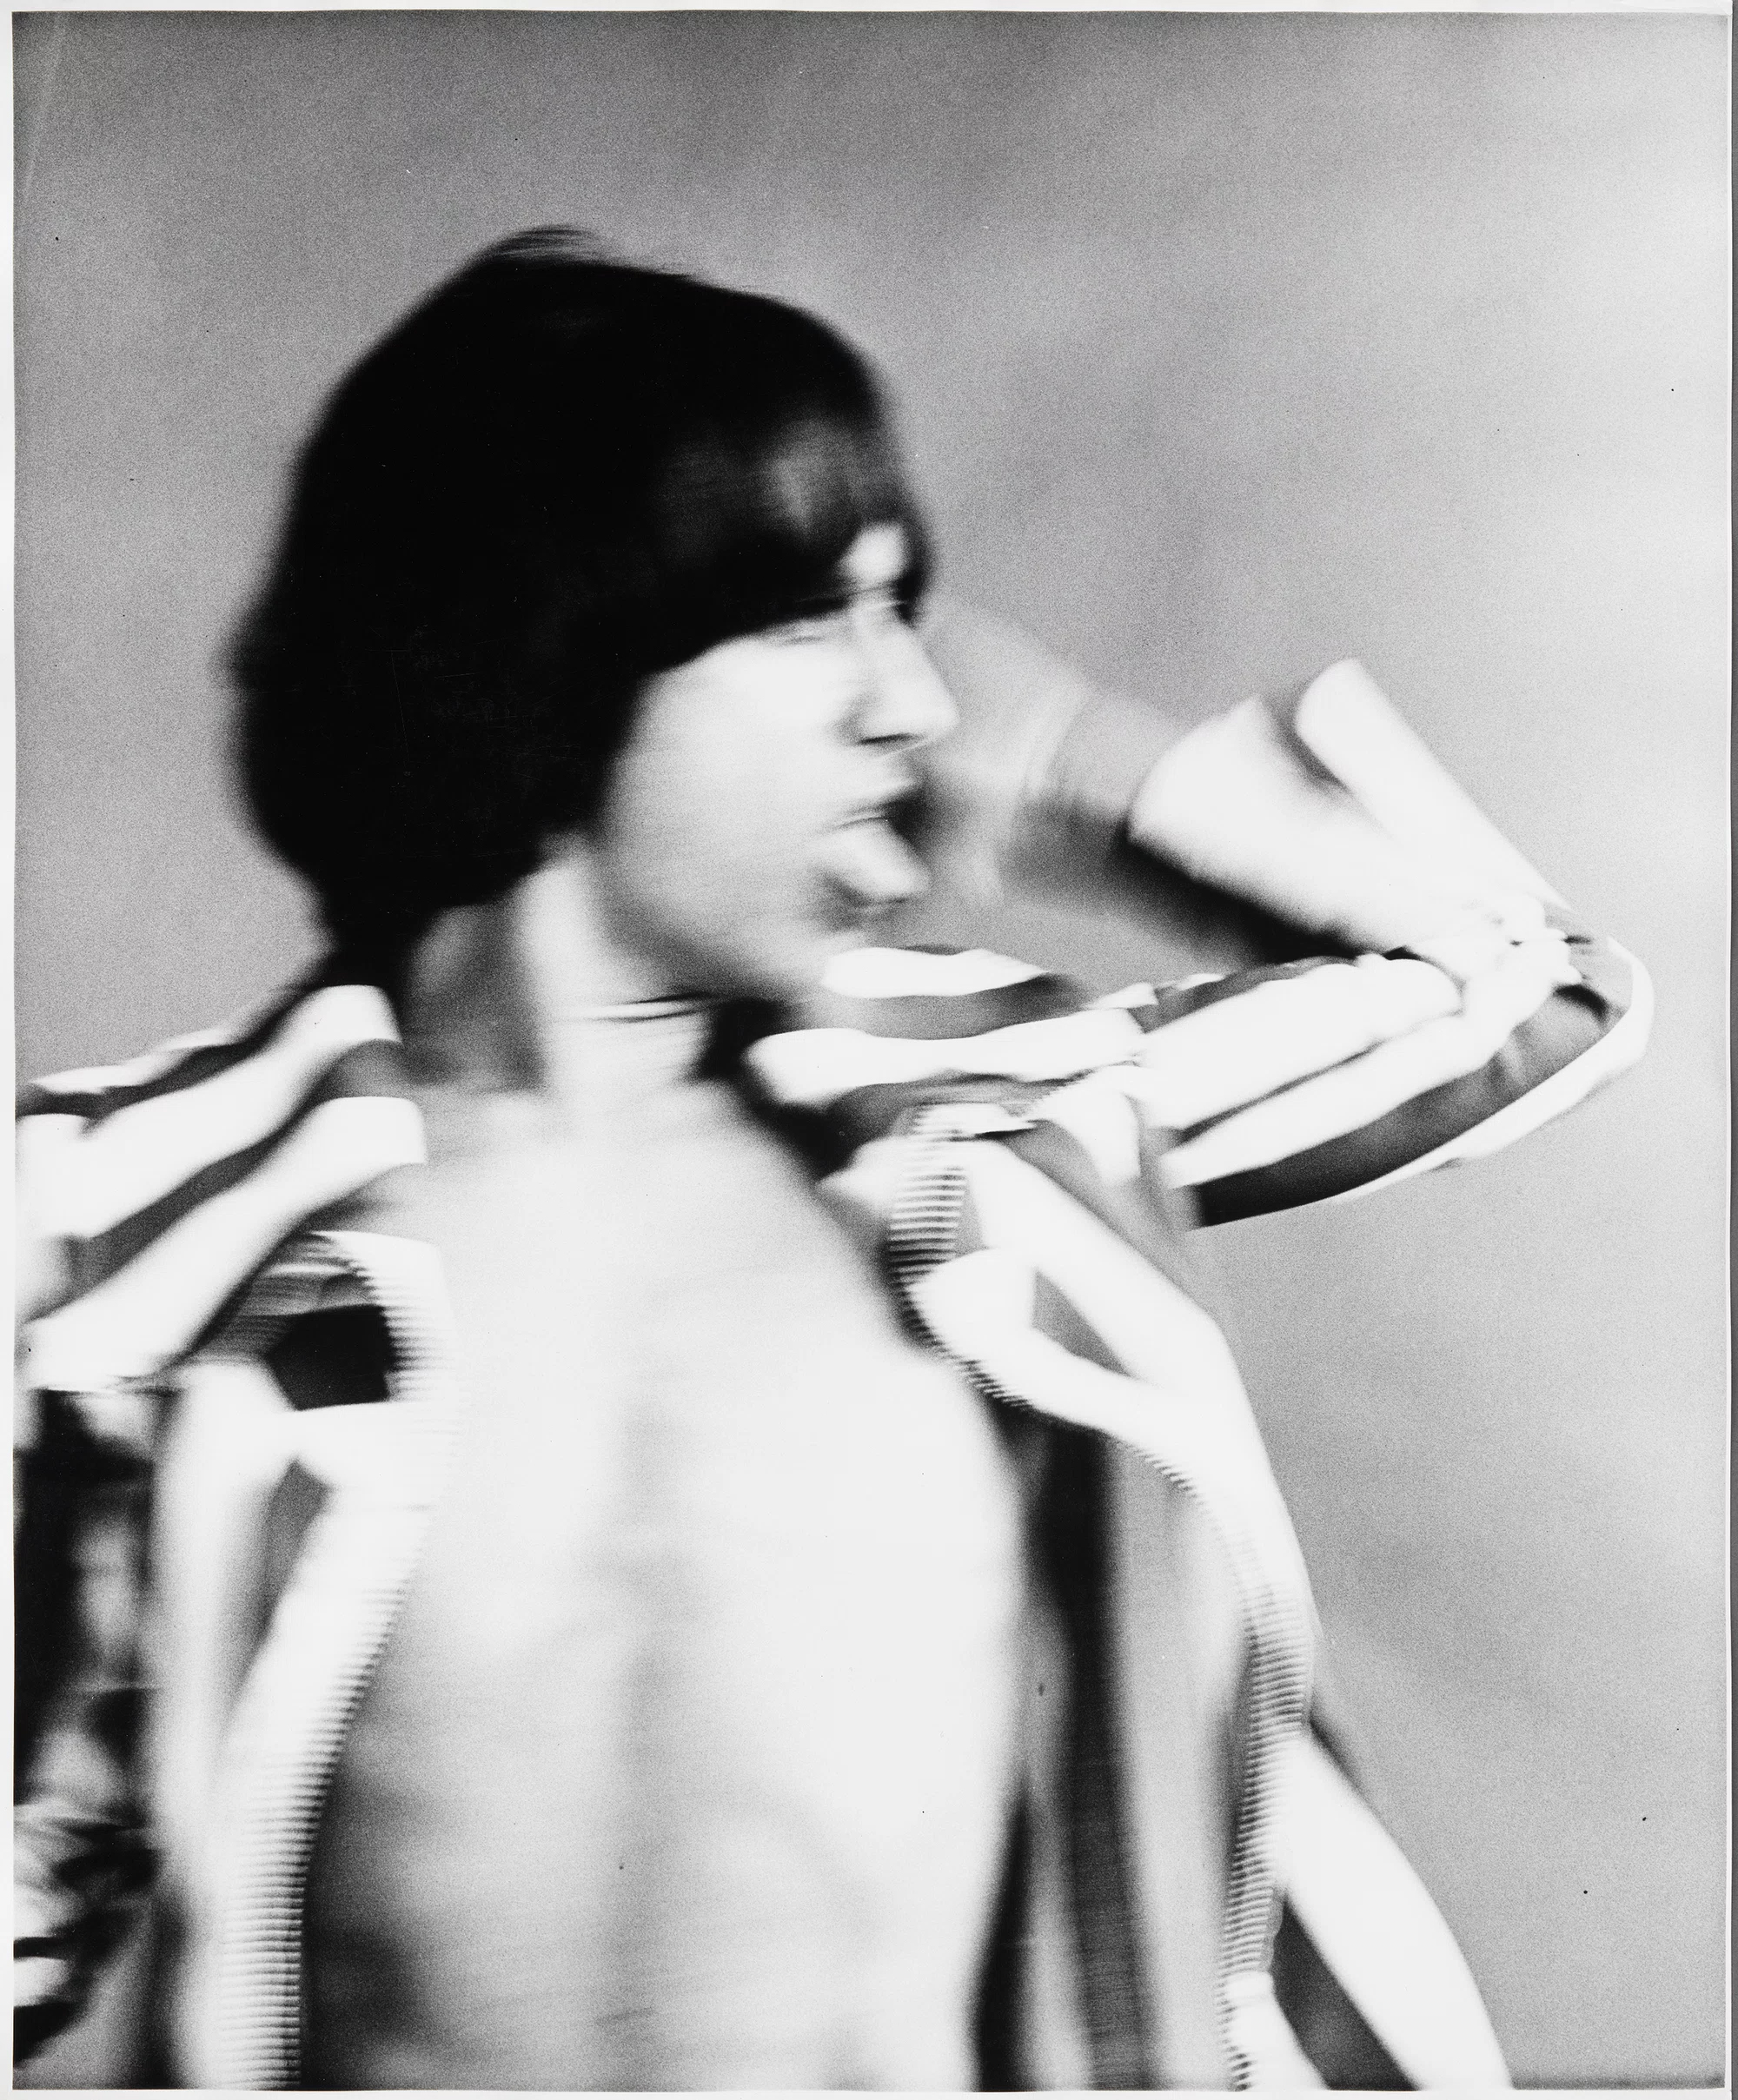 Peter Hujar, Iggy Pop in Striped Jacket, 1969